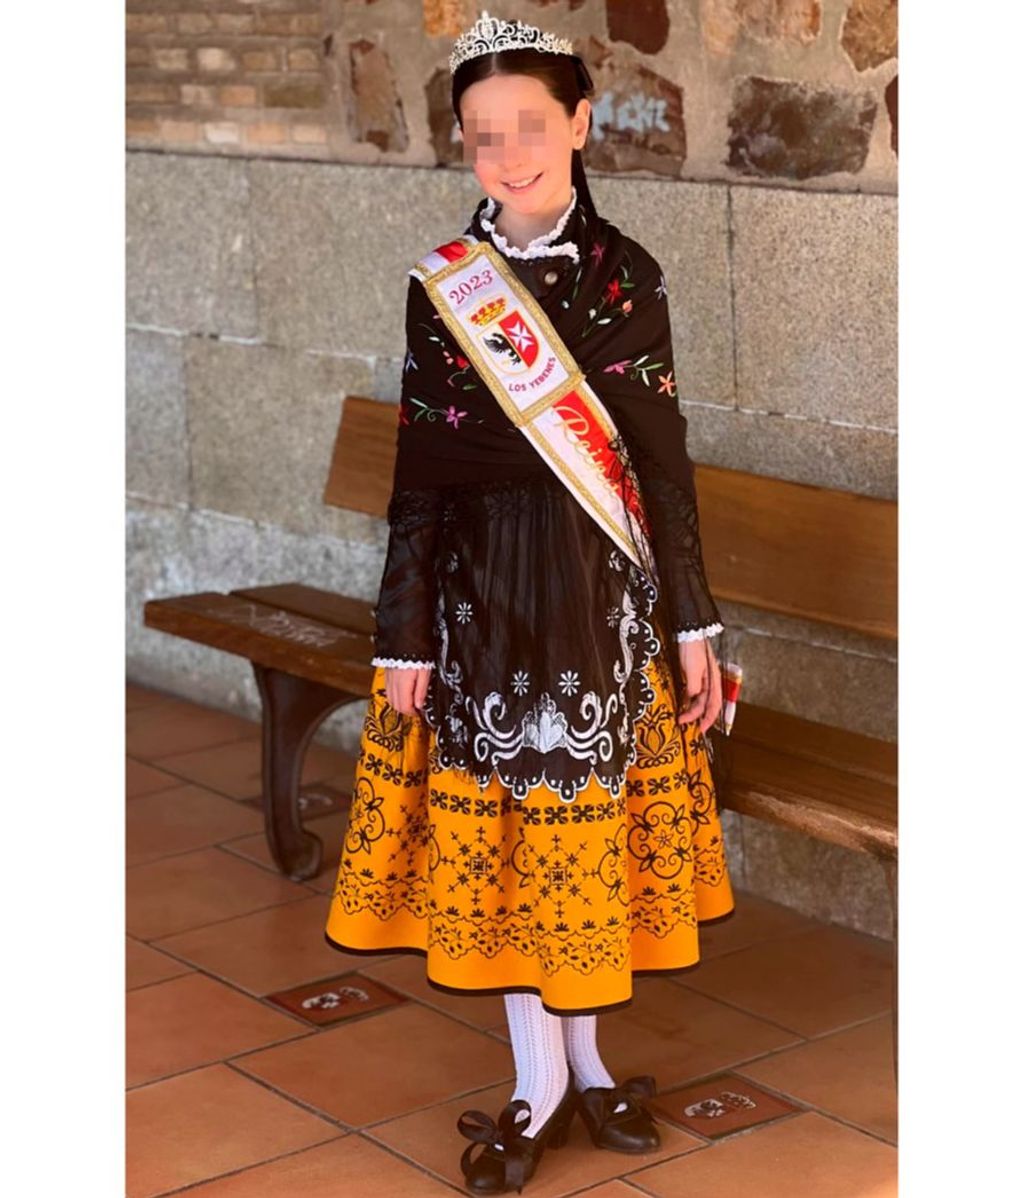 Valeria Atahonero es la reina infantil de Los Yébenes